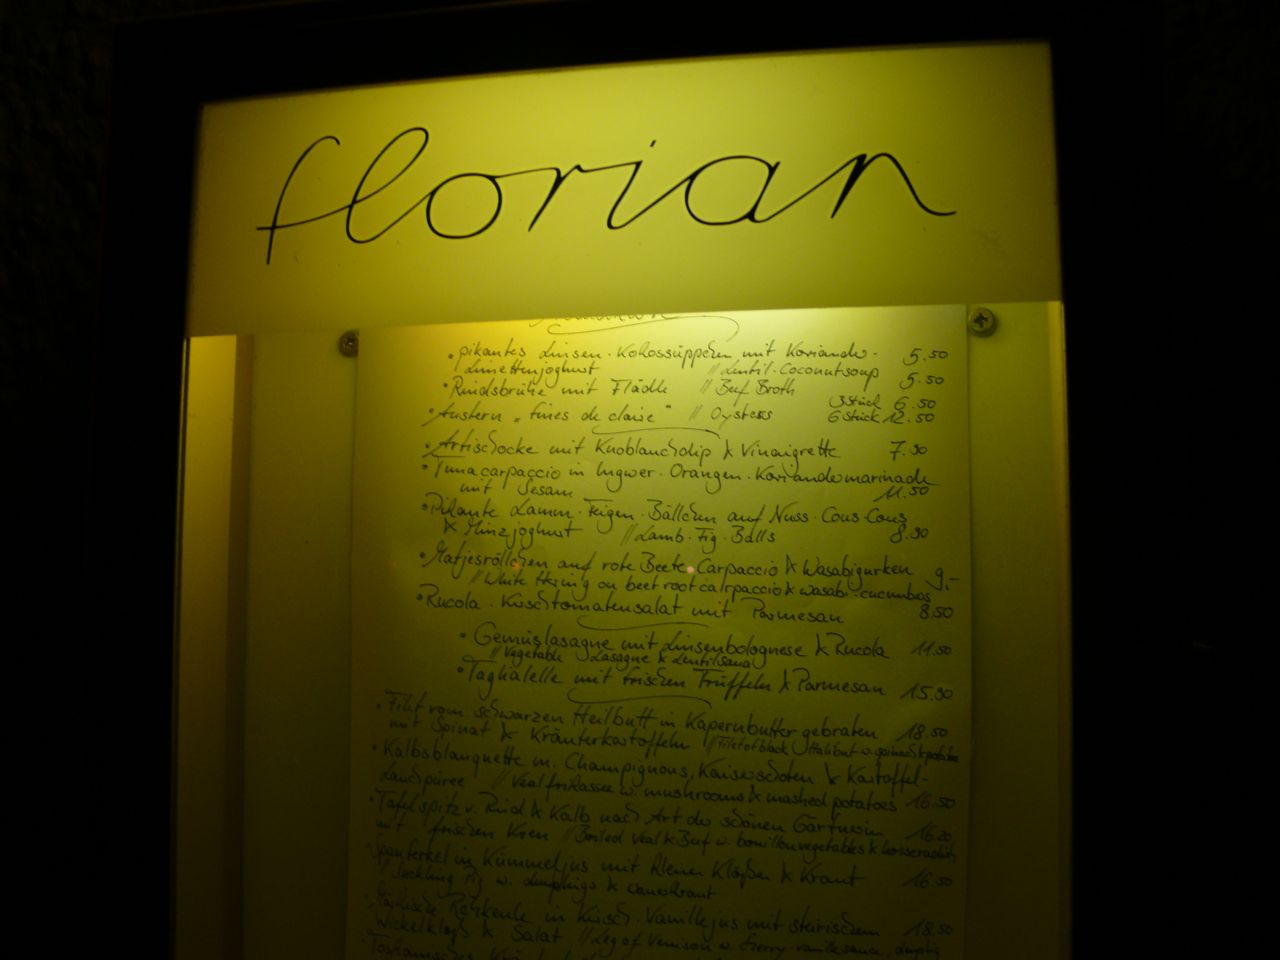 <!--:en-->Fabulous German Cuisine at Florian’s in Berlin<!--:-->